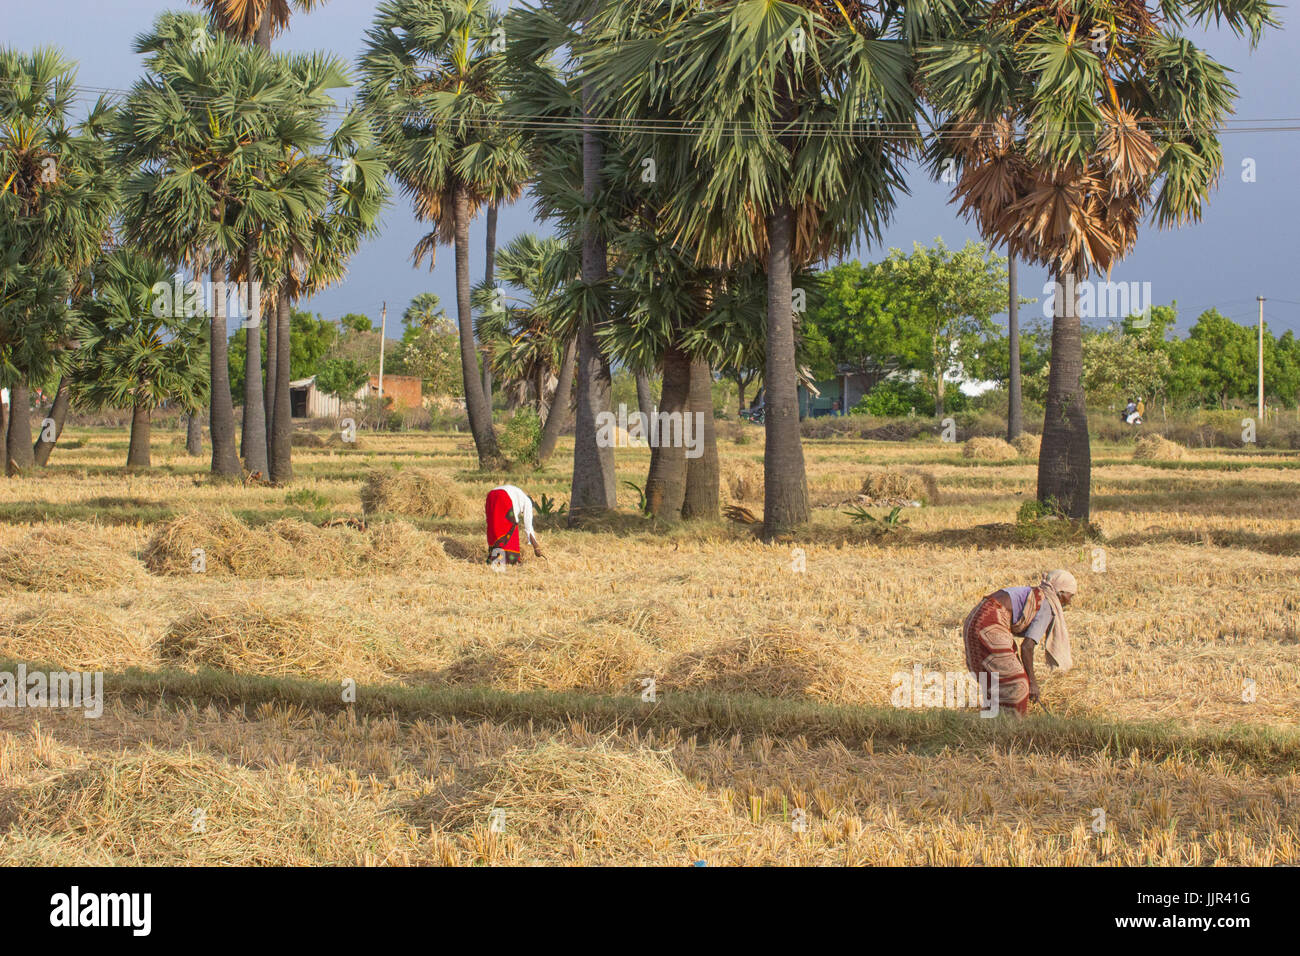 Rice paddy field in Tamilnadu,India. Stock Photo